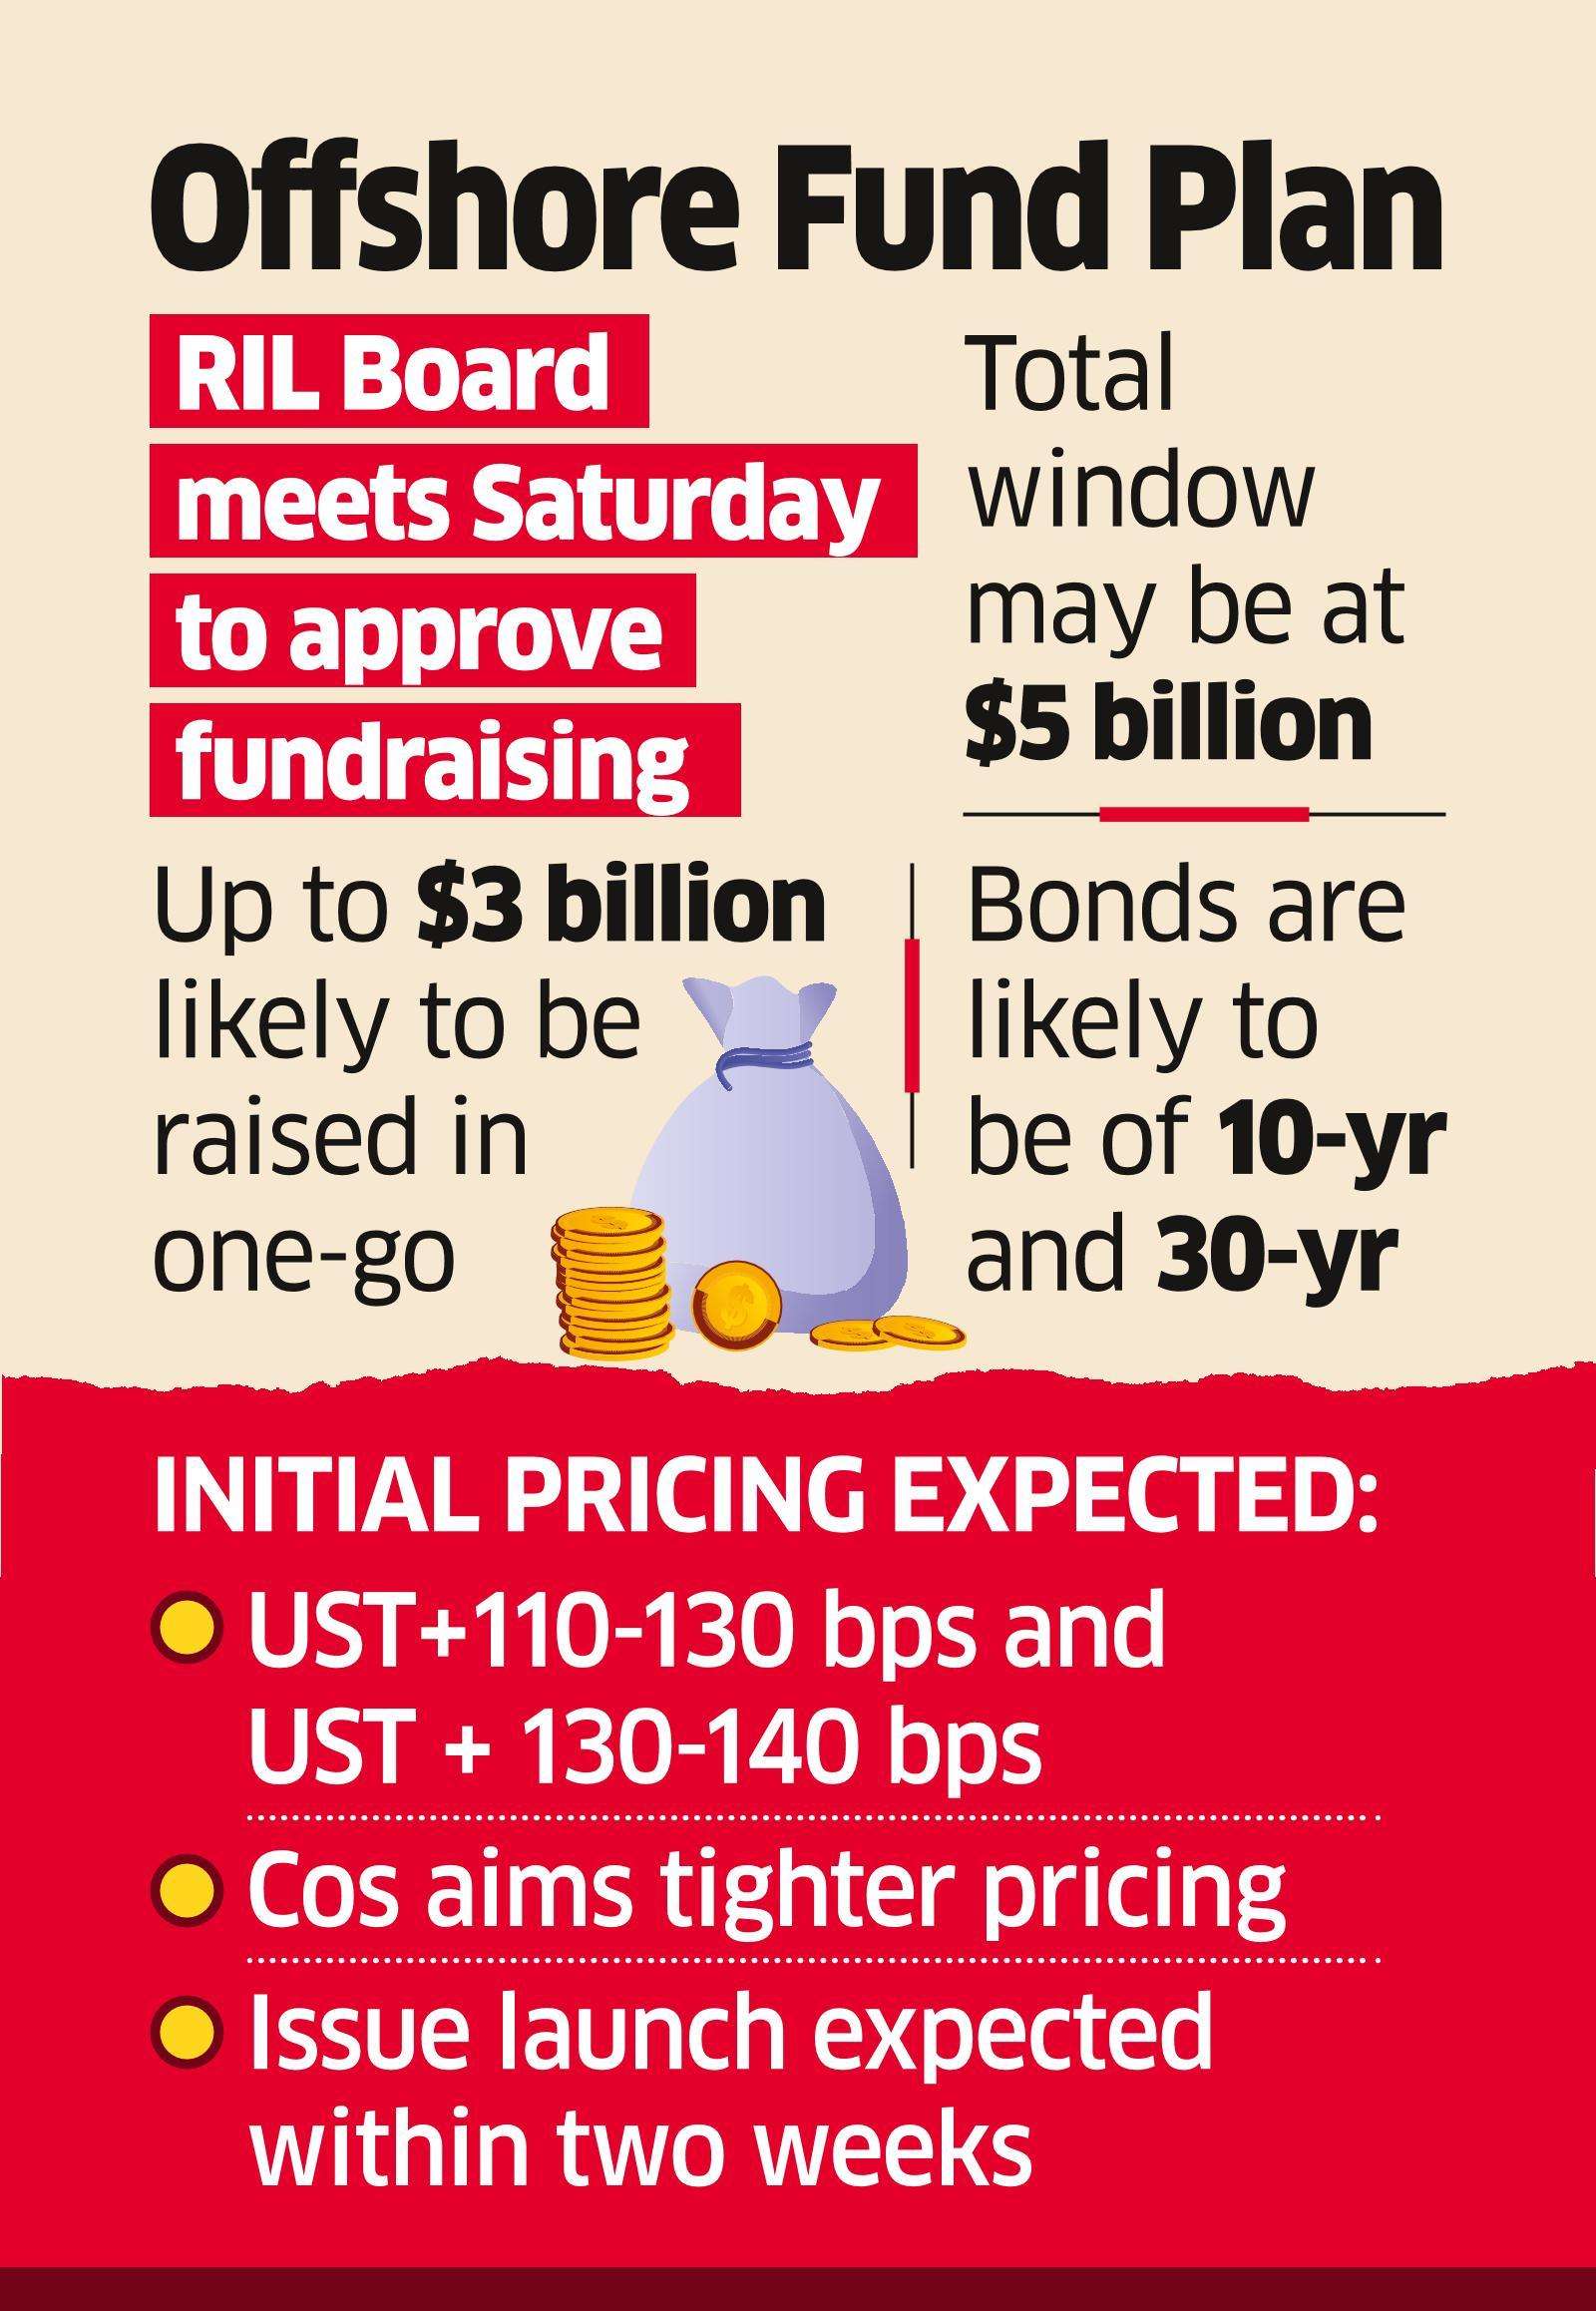 RIL plans to raise up to USD 3 billion via overseas bonds